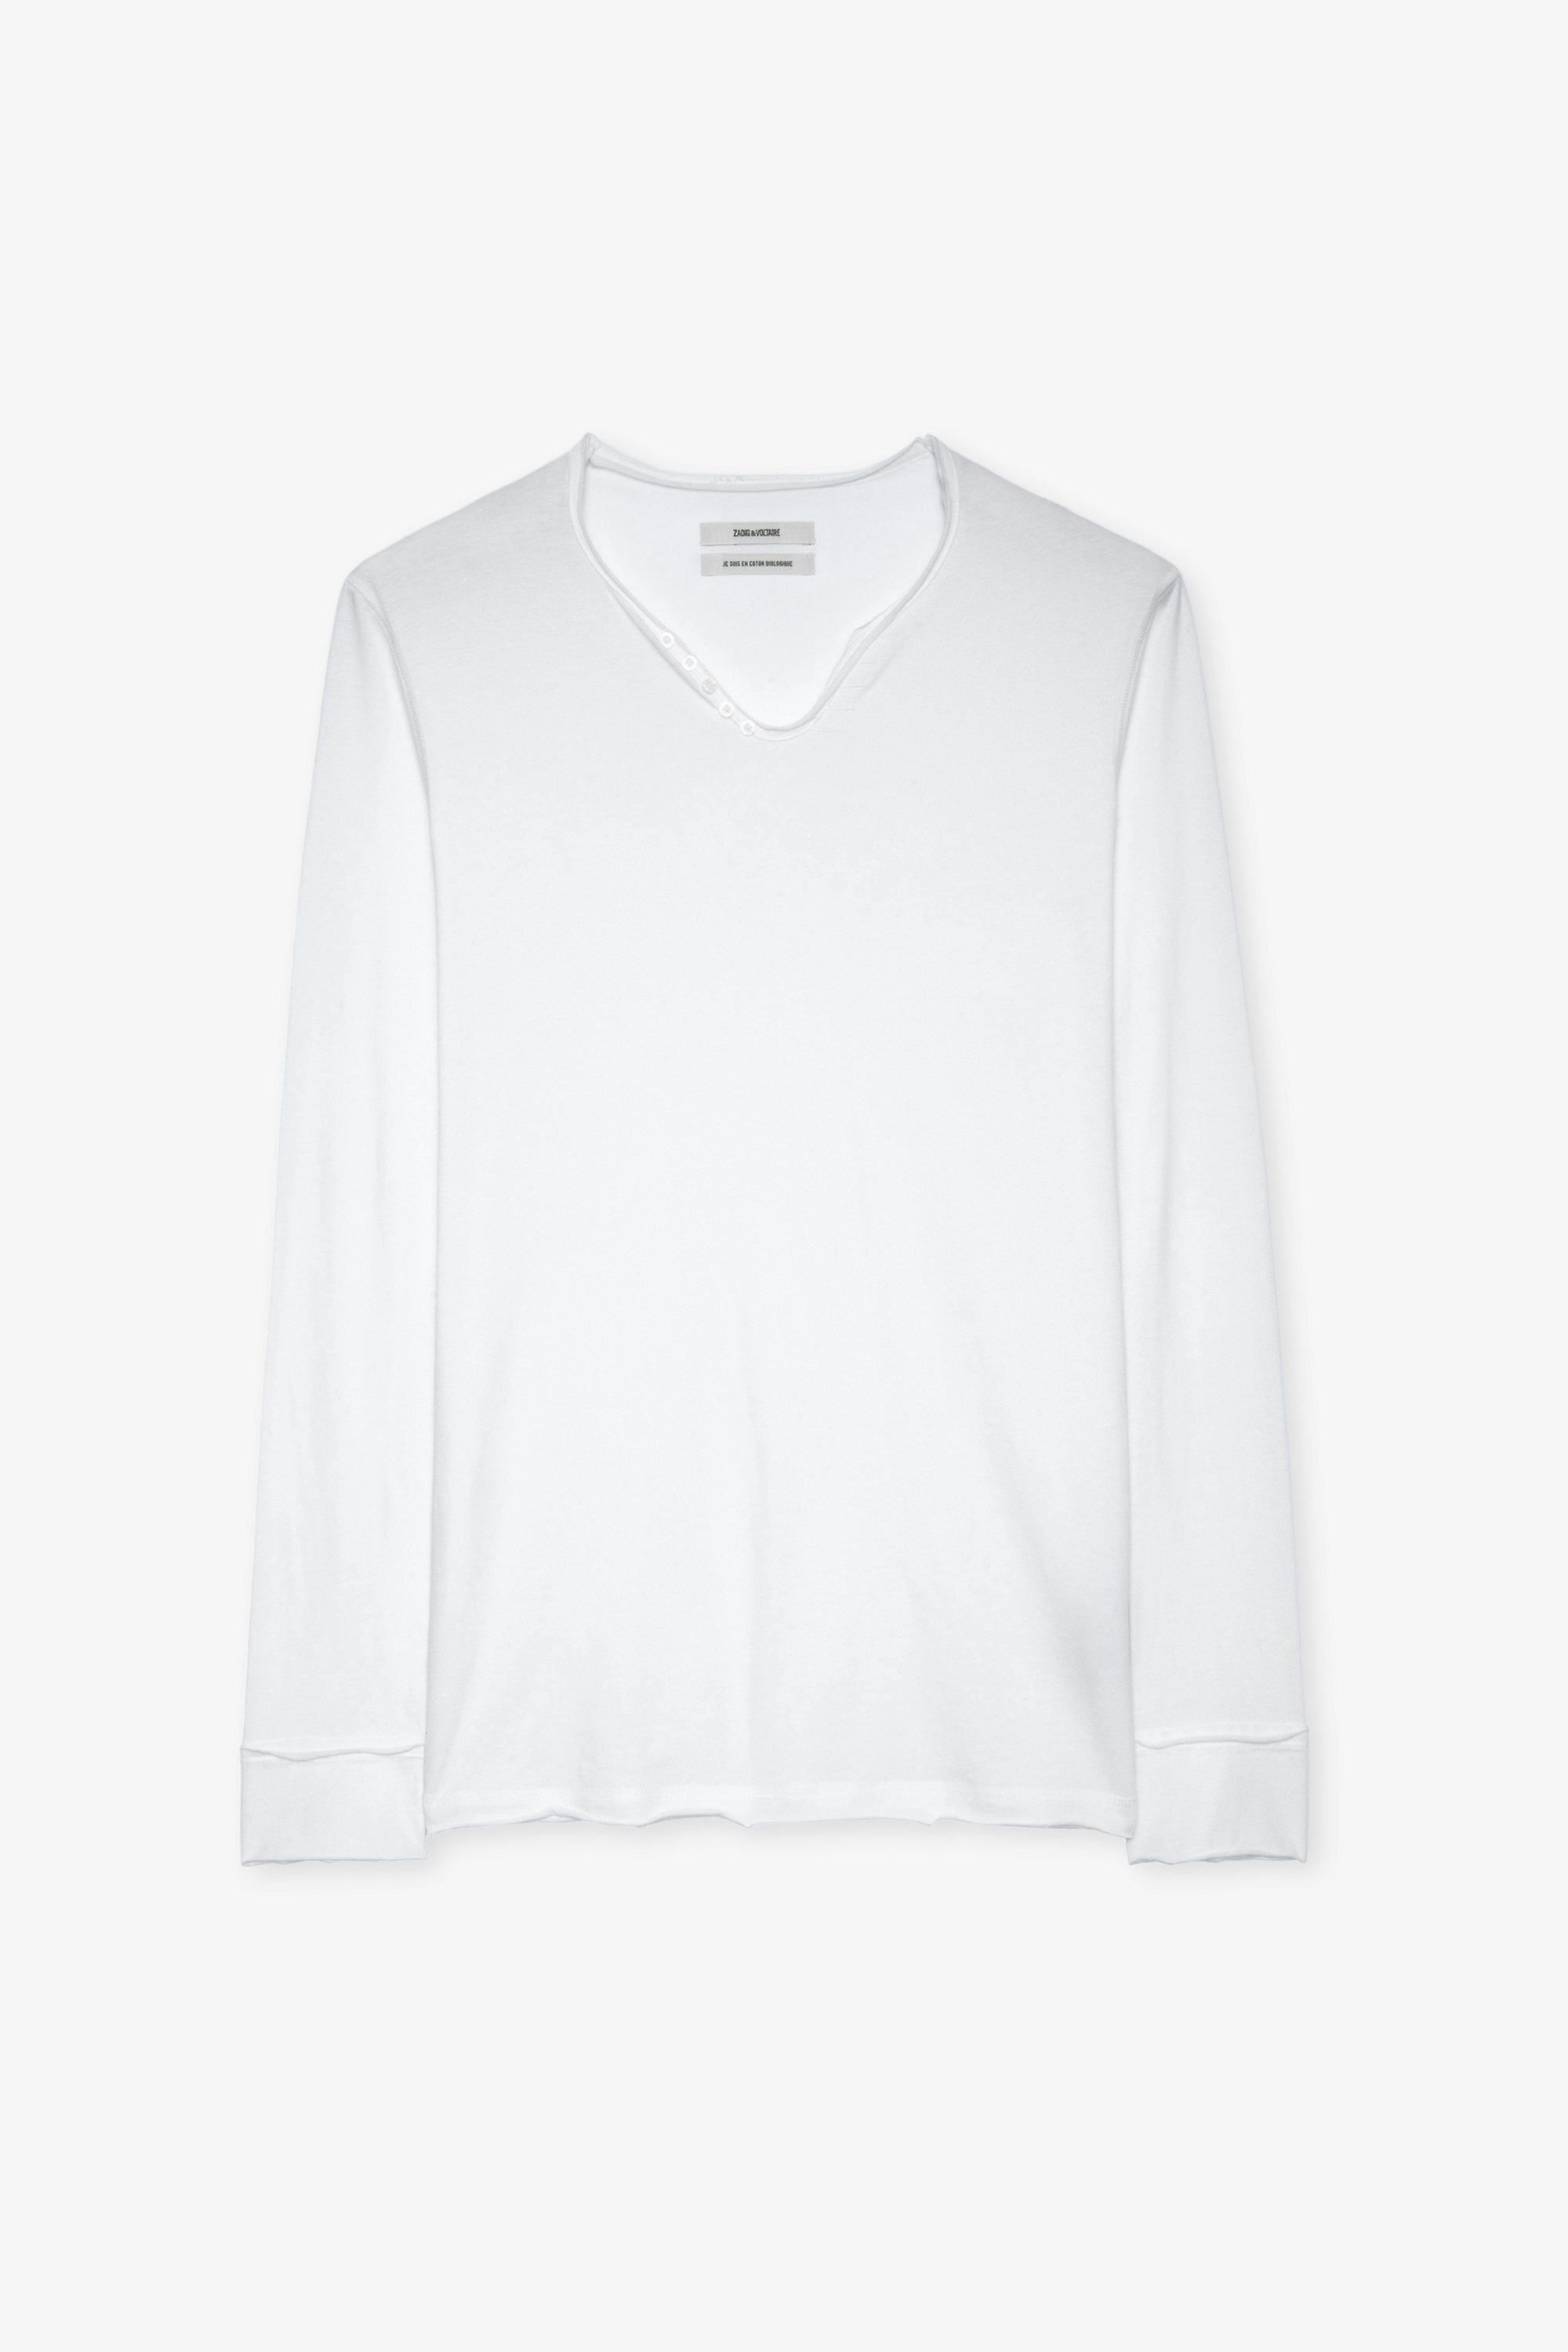 Monastir T-shirt Men’s white cotton henley T-shirt